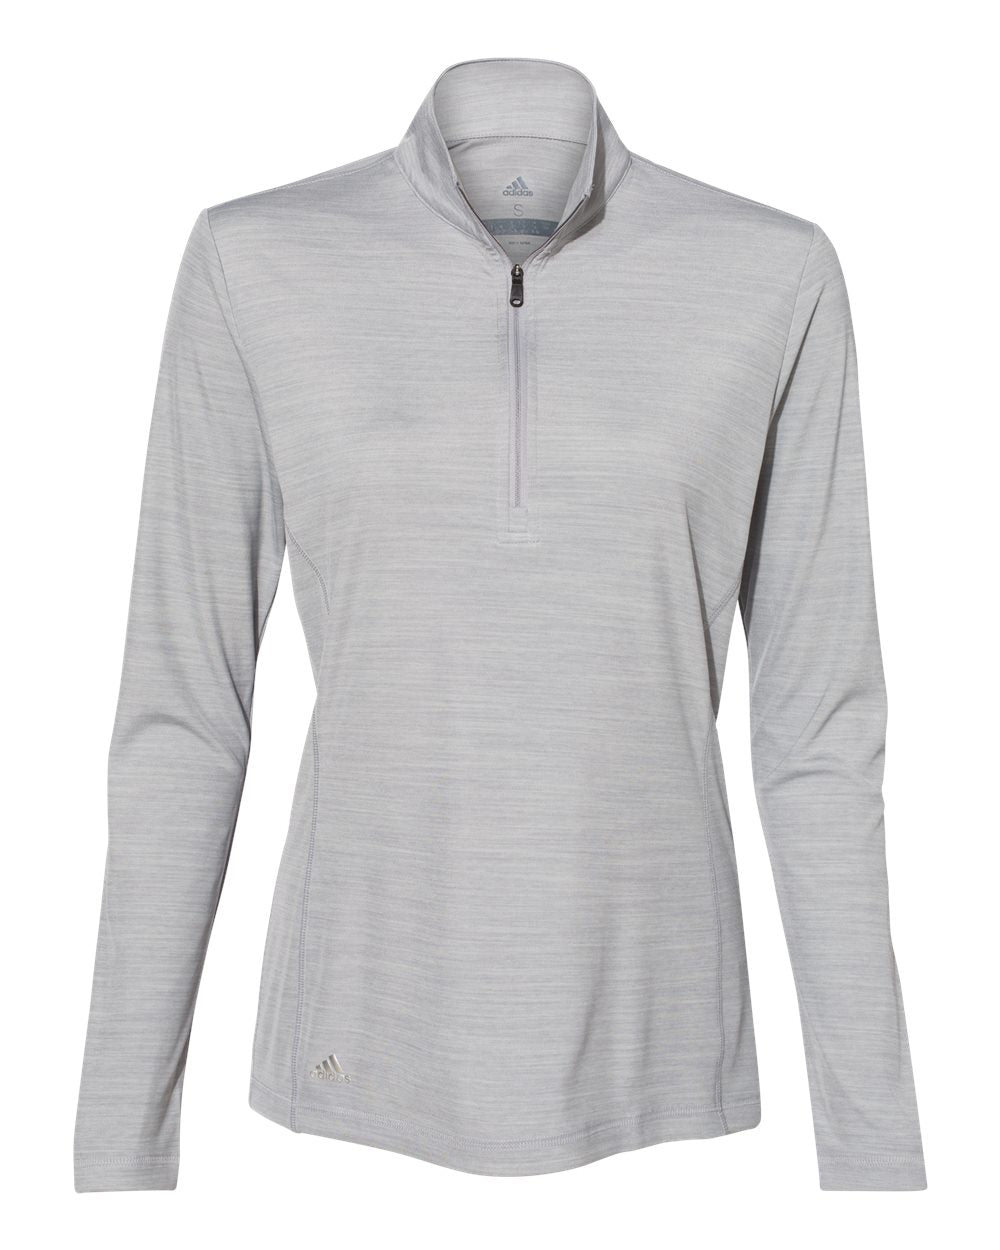 Adidas A476 Women's Lightweight Mélange Quarter-Zip Pullover #color_Mid Grey Melange